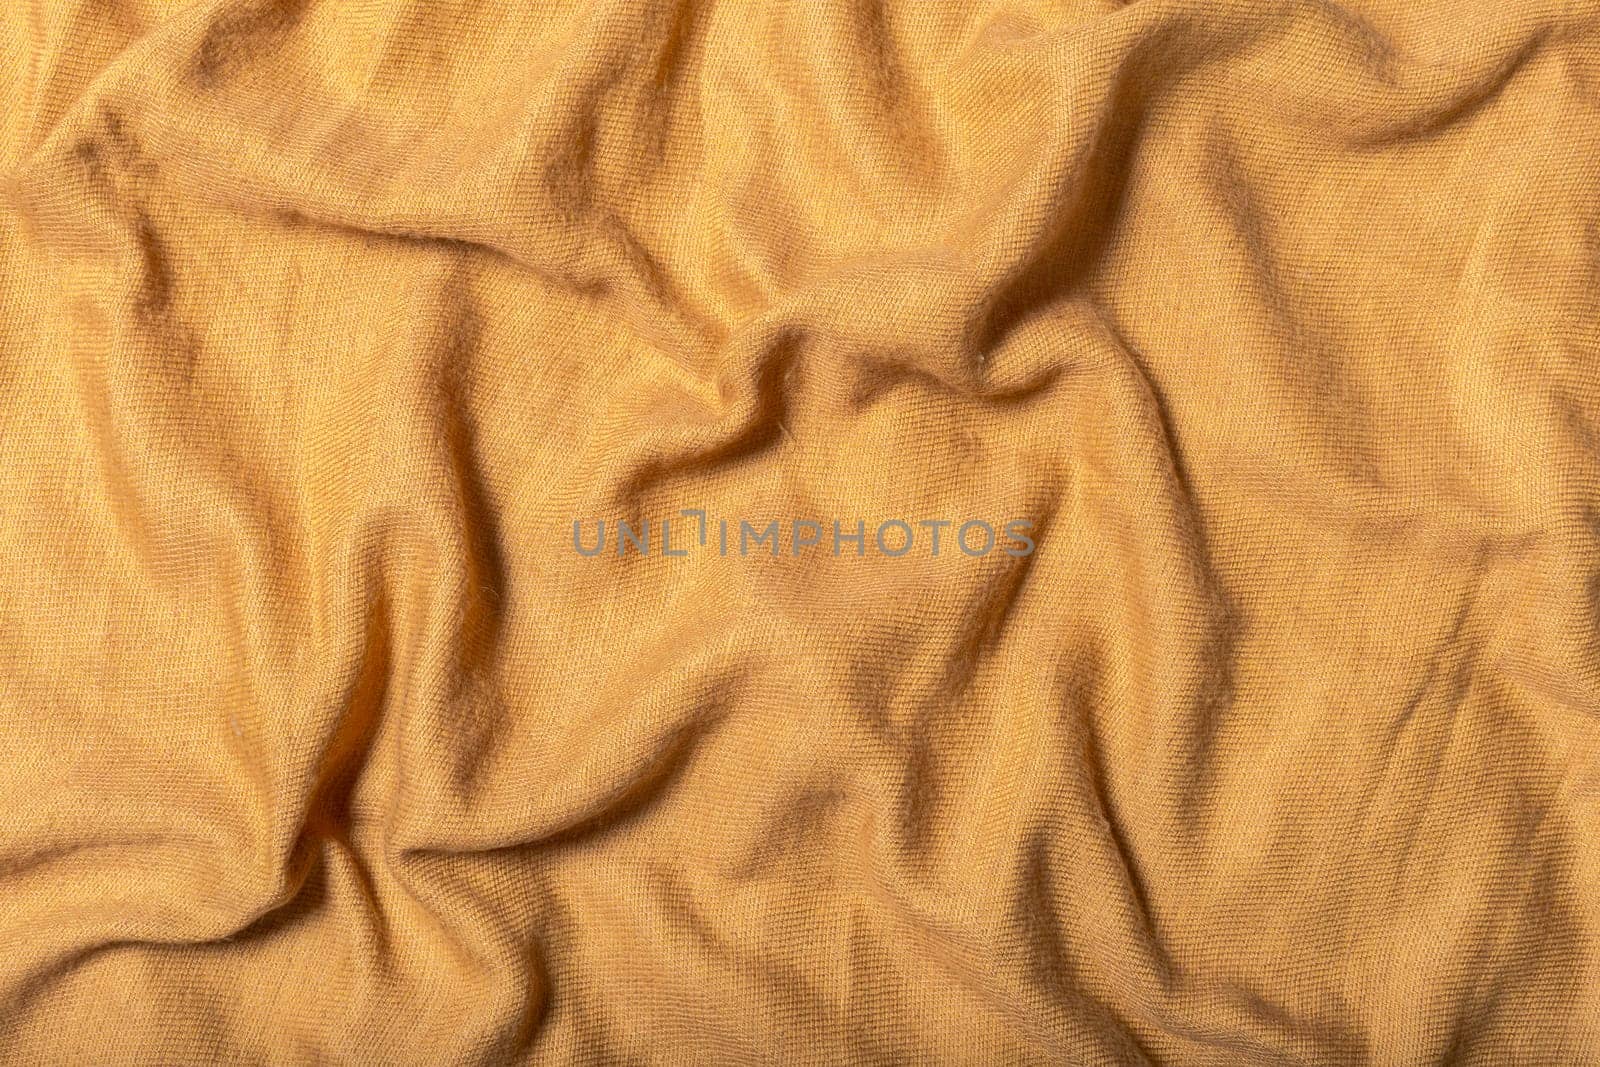 Sweater Texture by Fabrikasimf